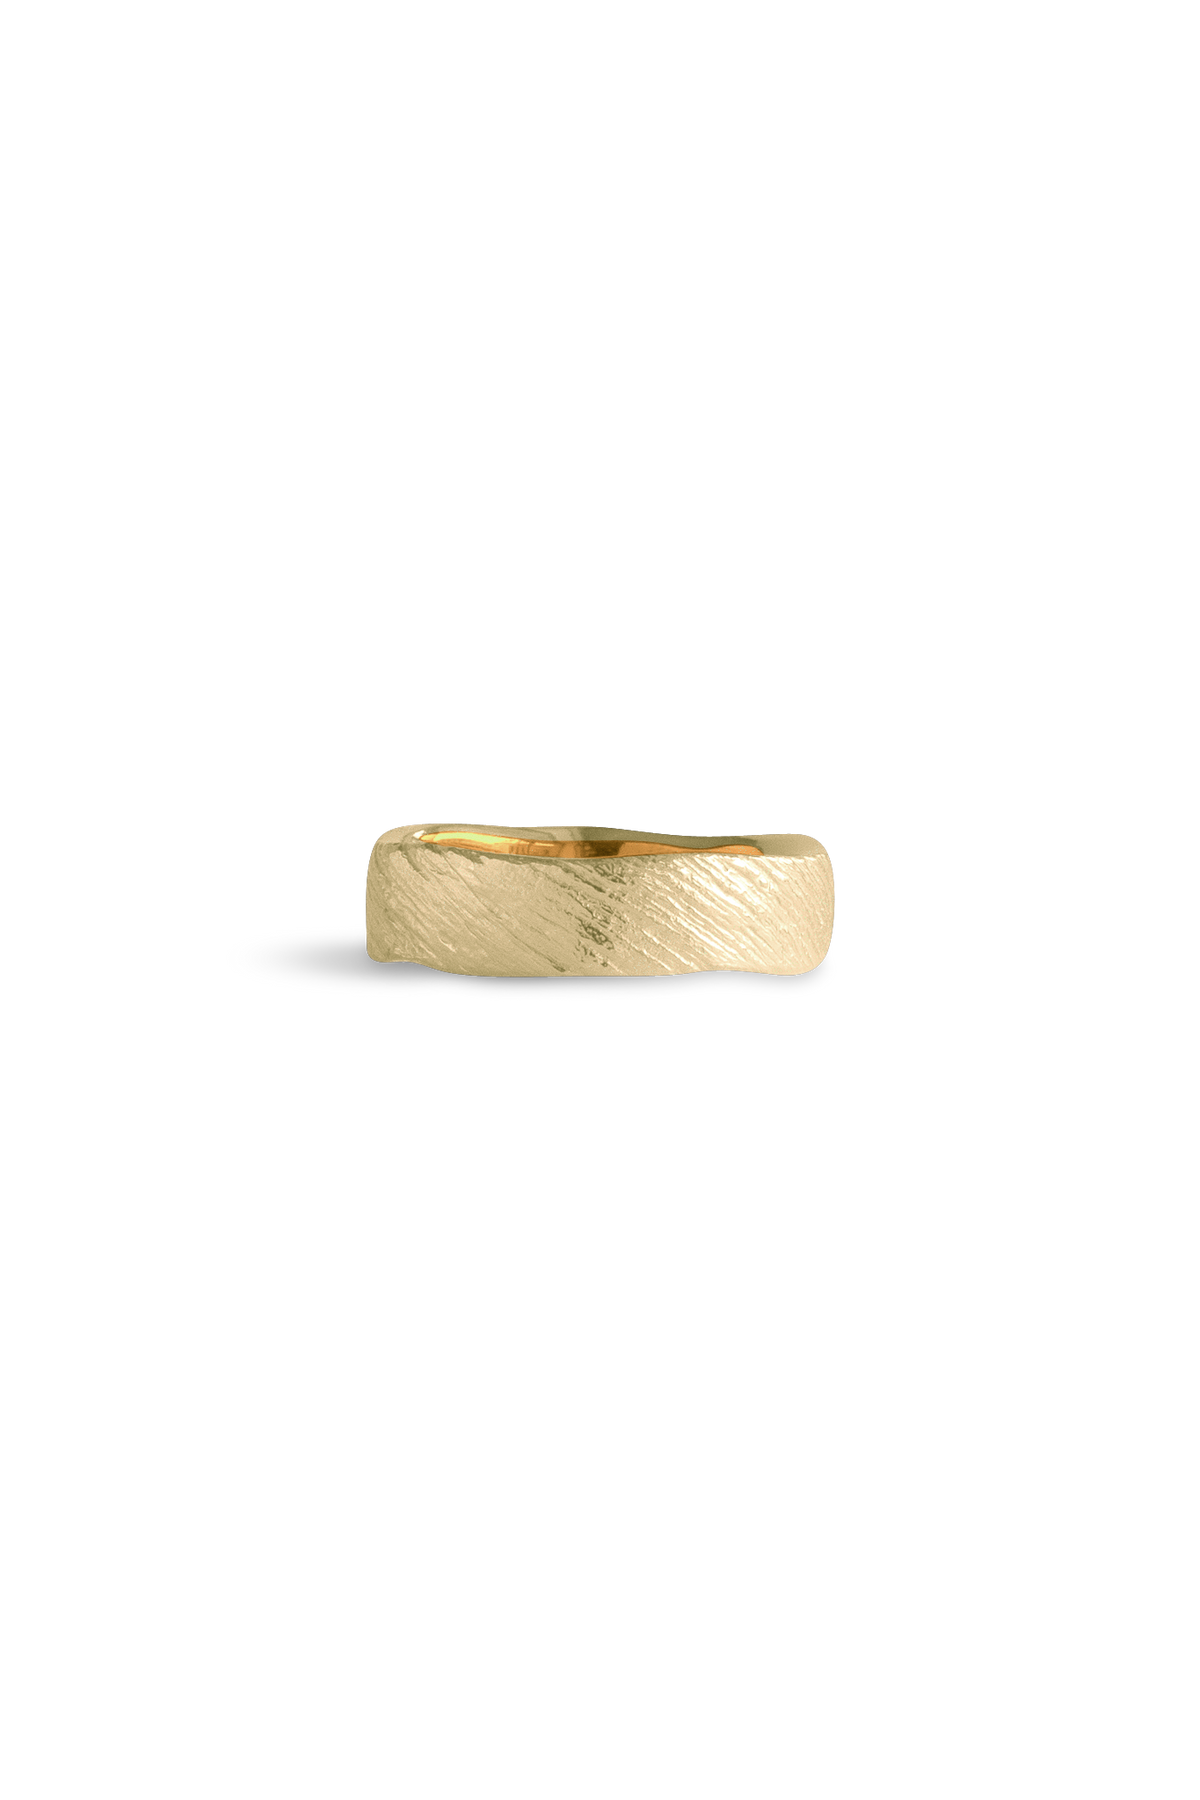 Bermuda Textures ~ Flatt's Dock Gold Ring